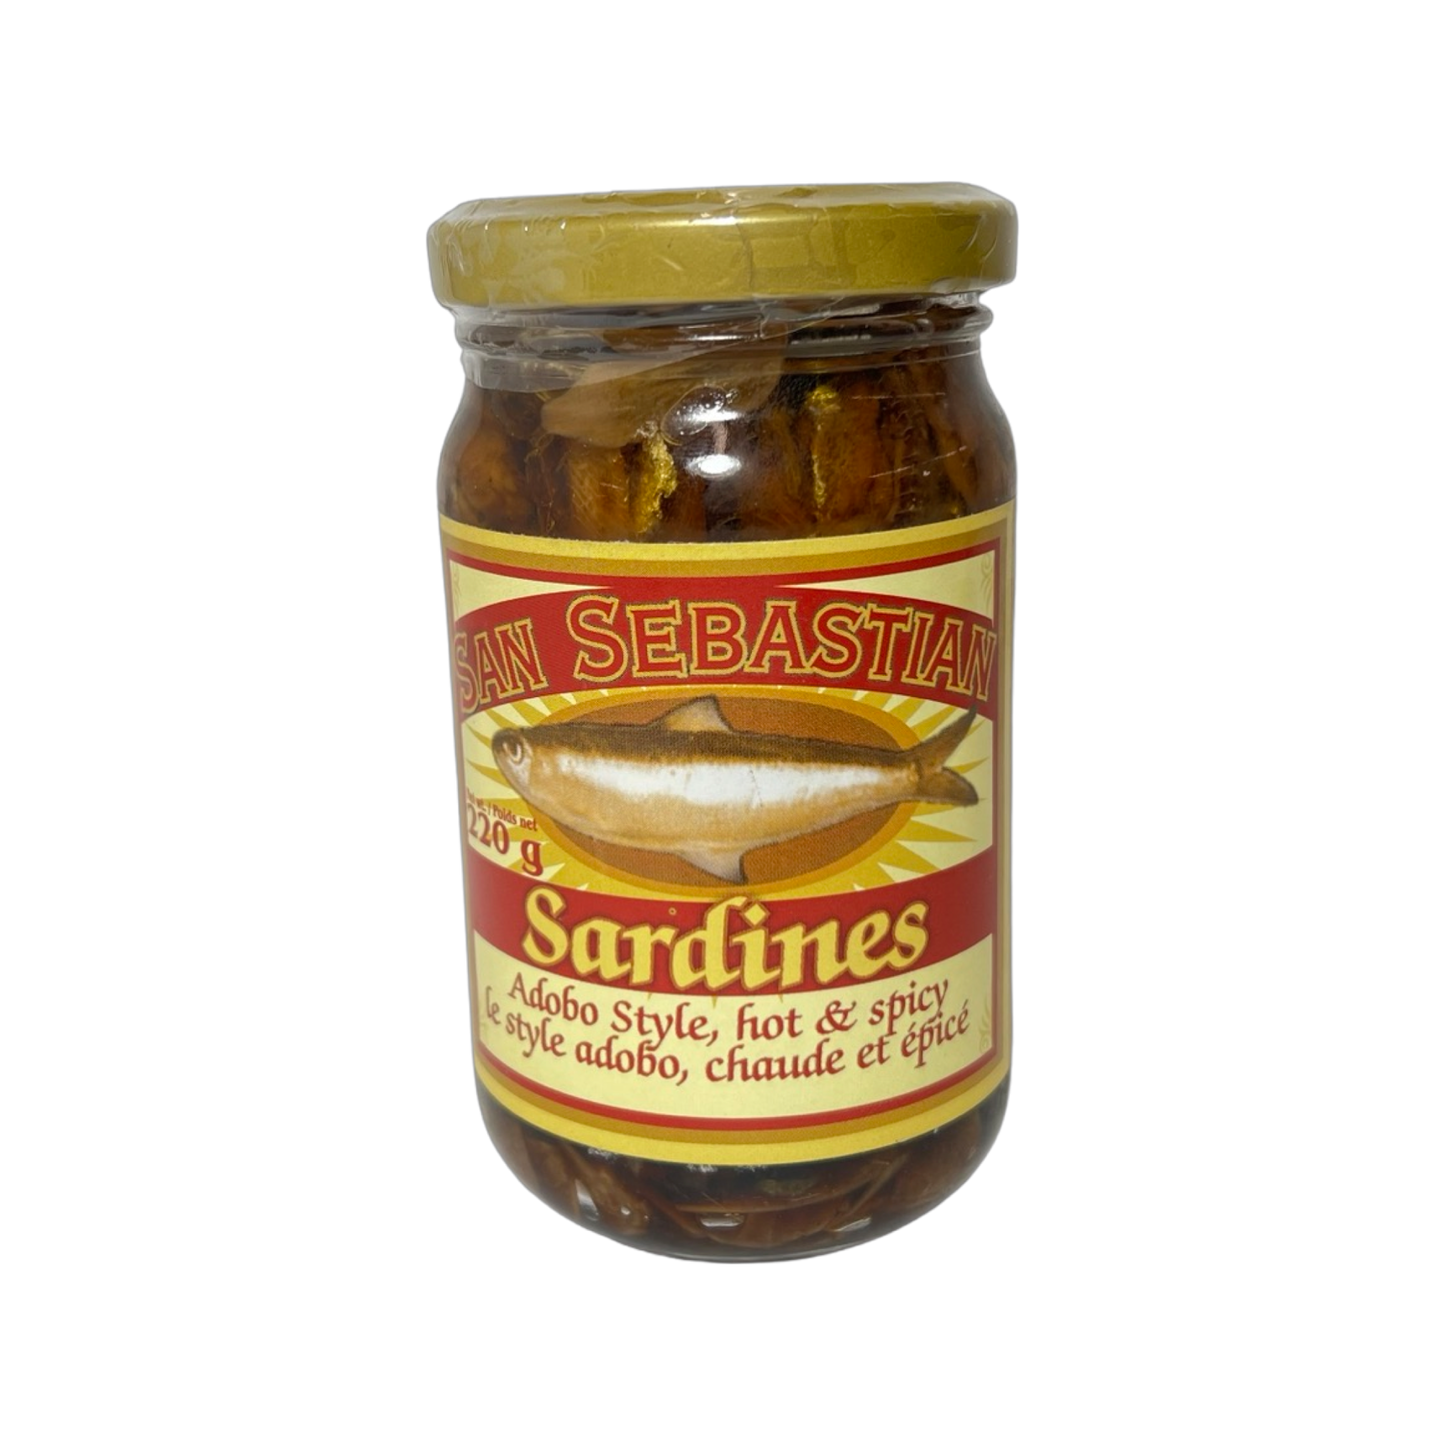 San Sebastian Sardines Adobo Style Hot and Spicy 220g